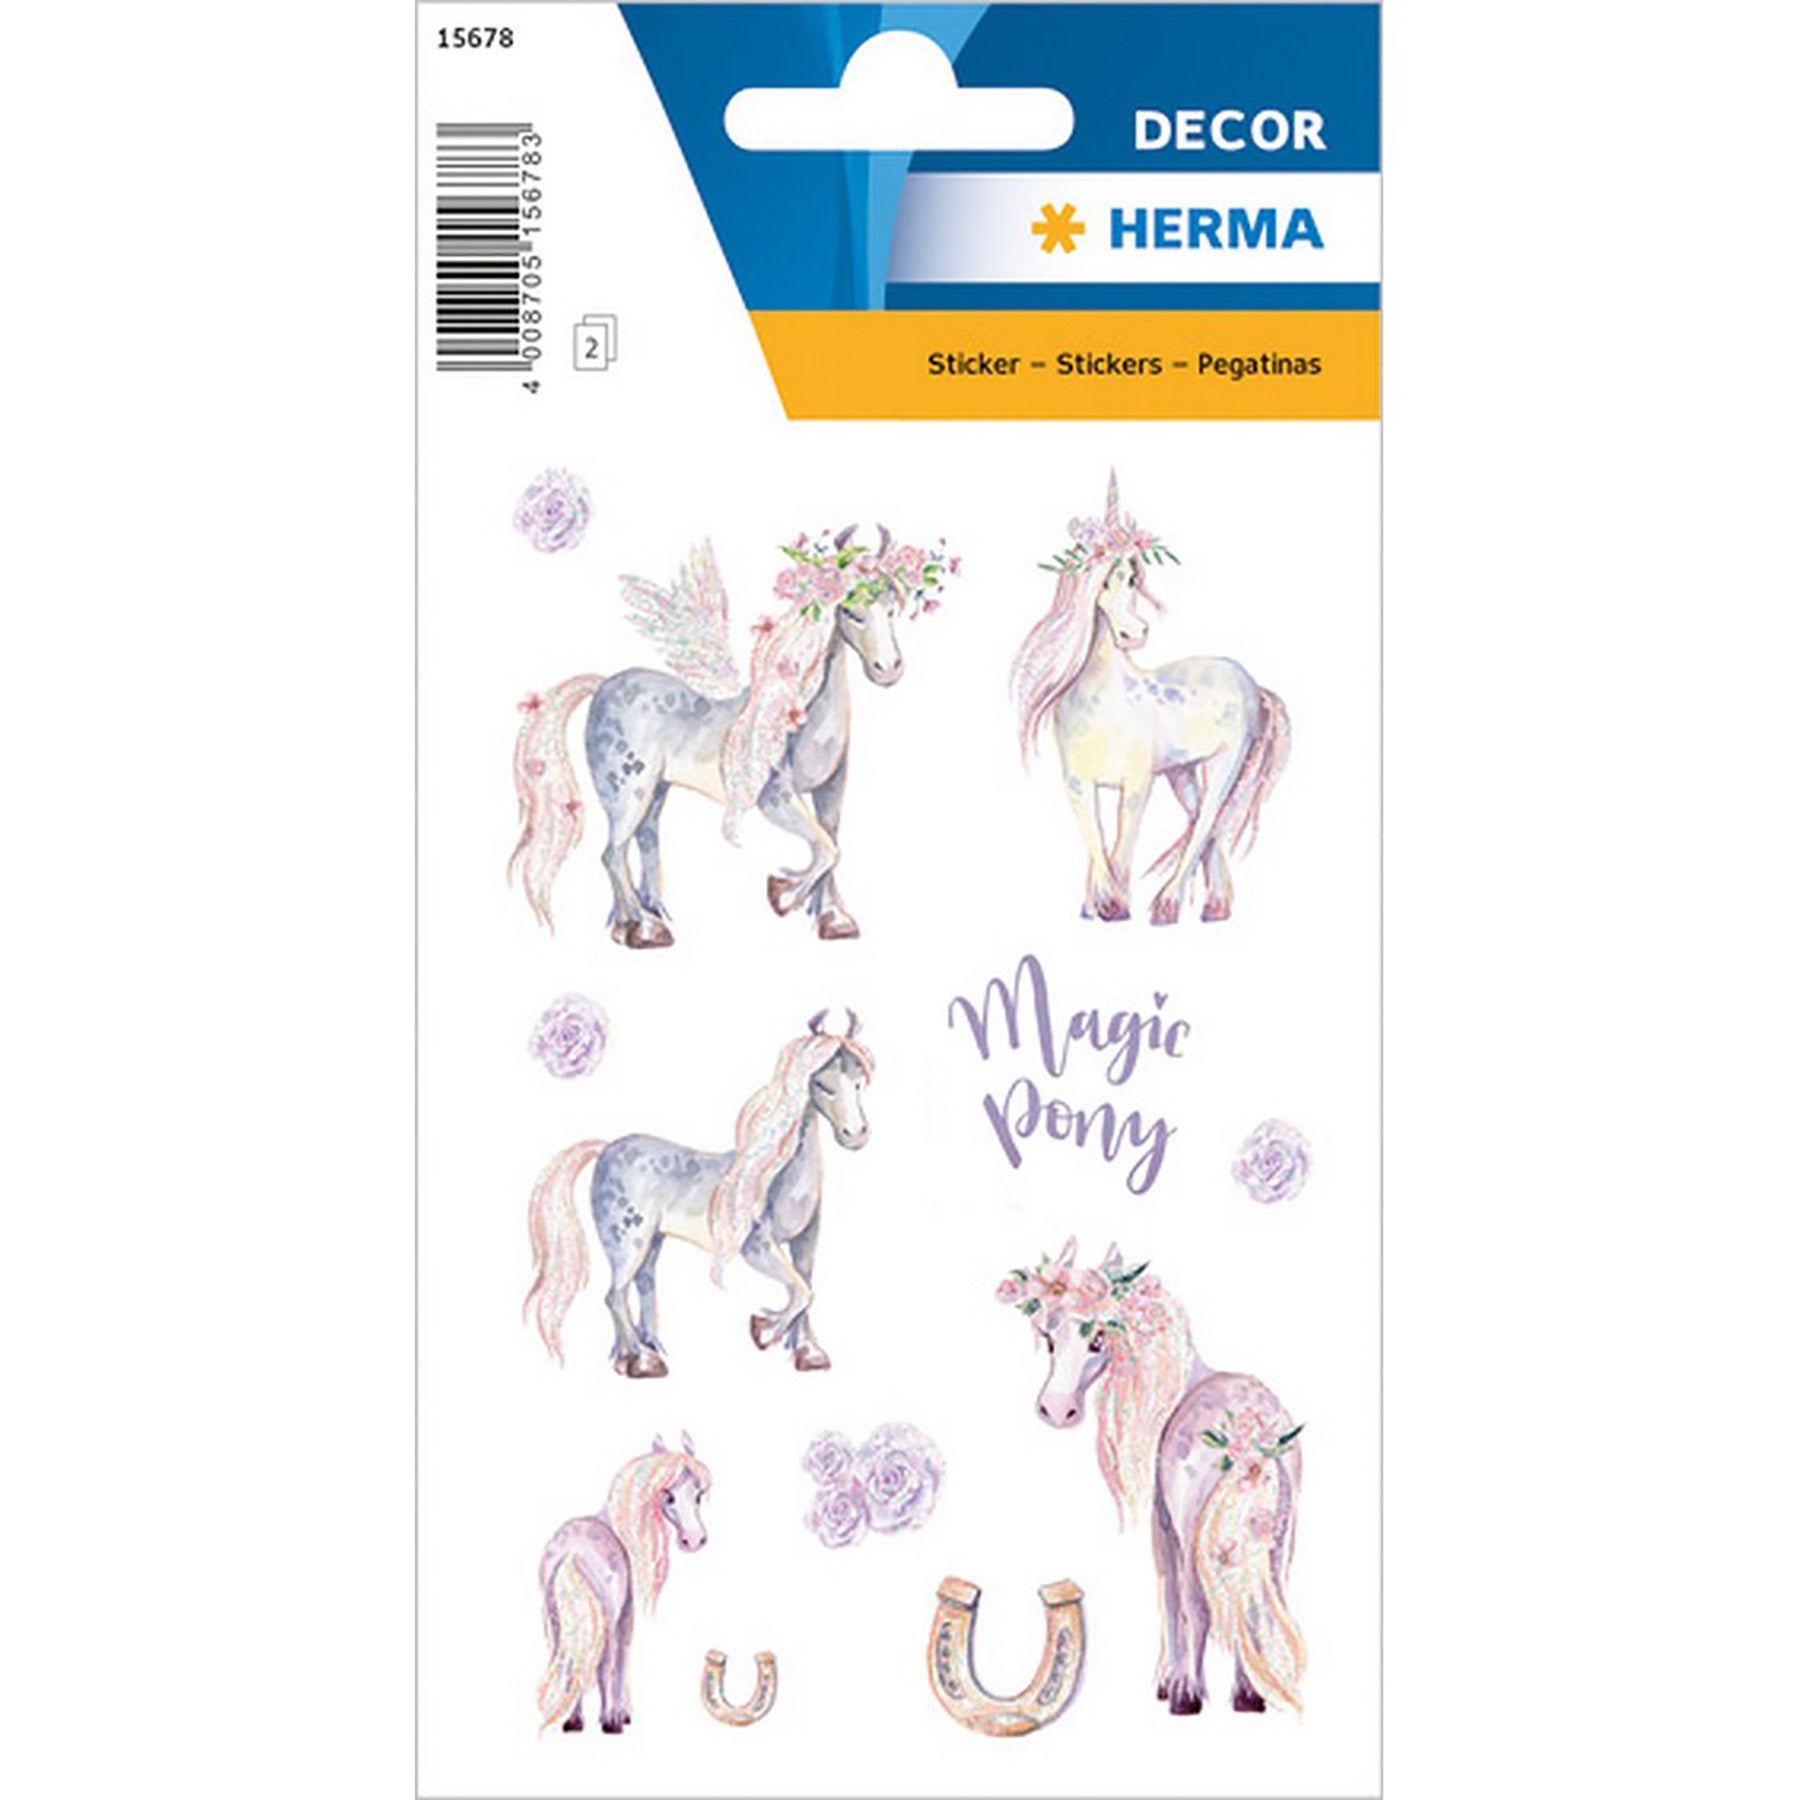 Herma Décor 2 Sheets Stickers Unicorn Magic Glitter 4.75x3.1in Sheet